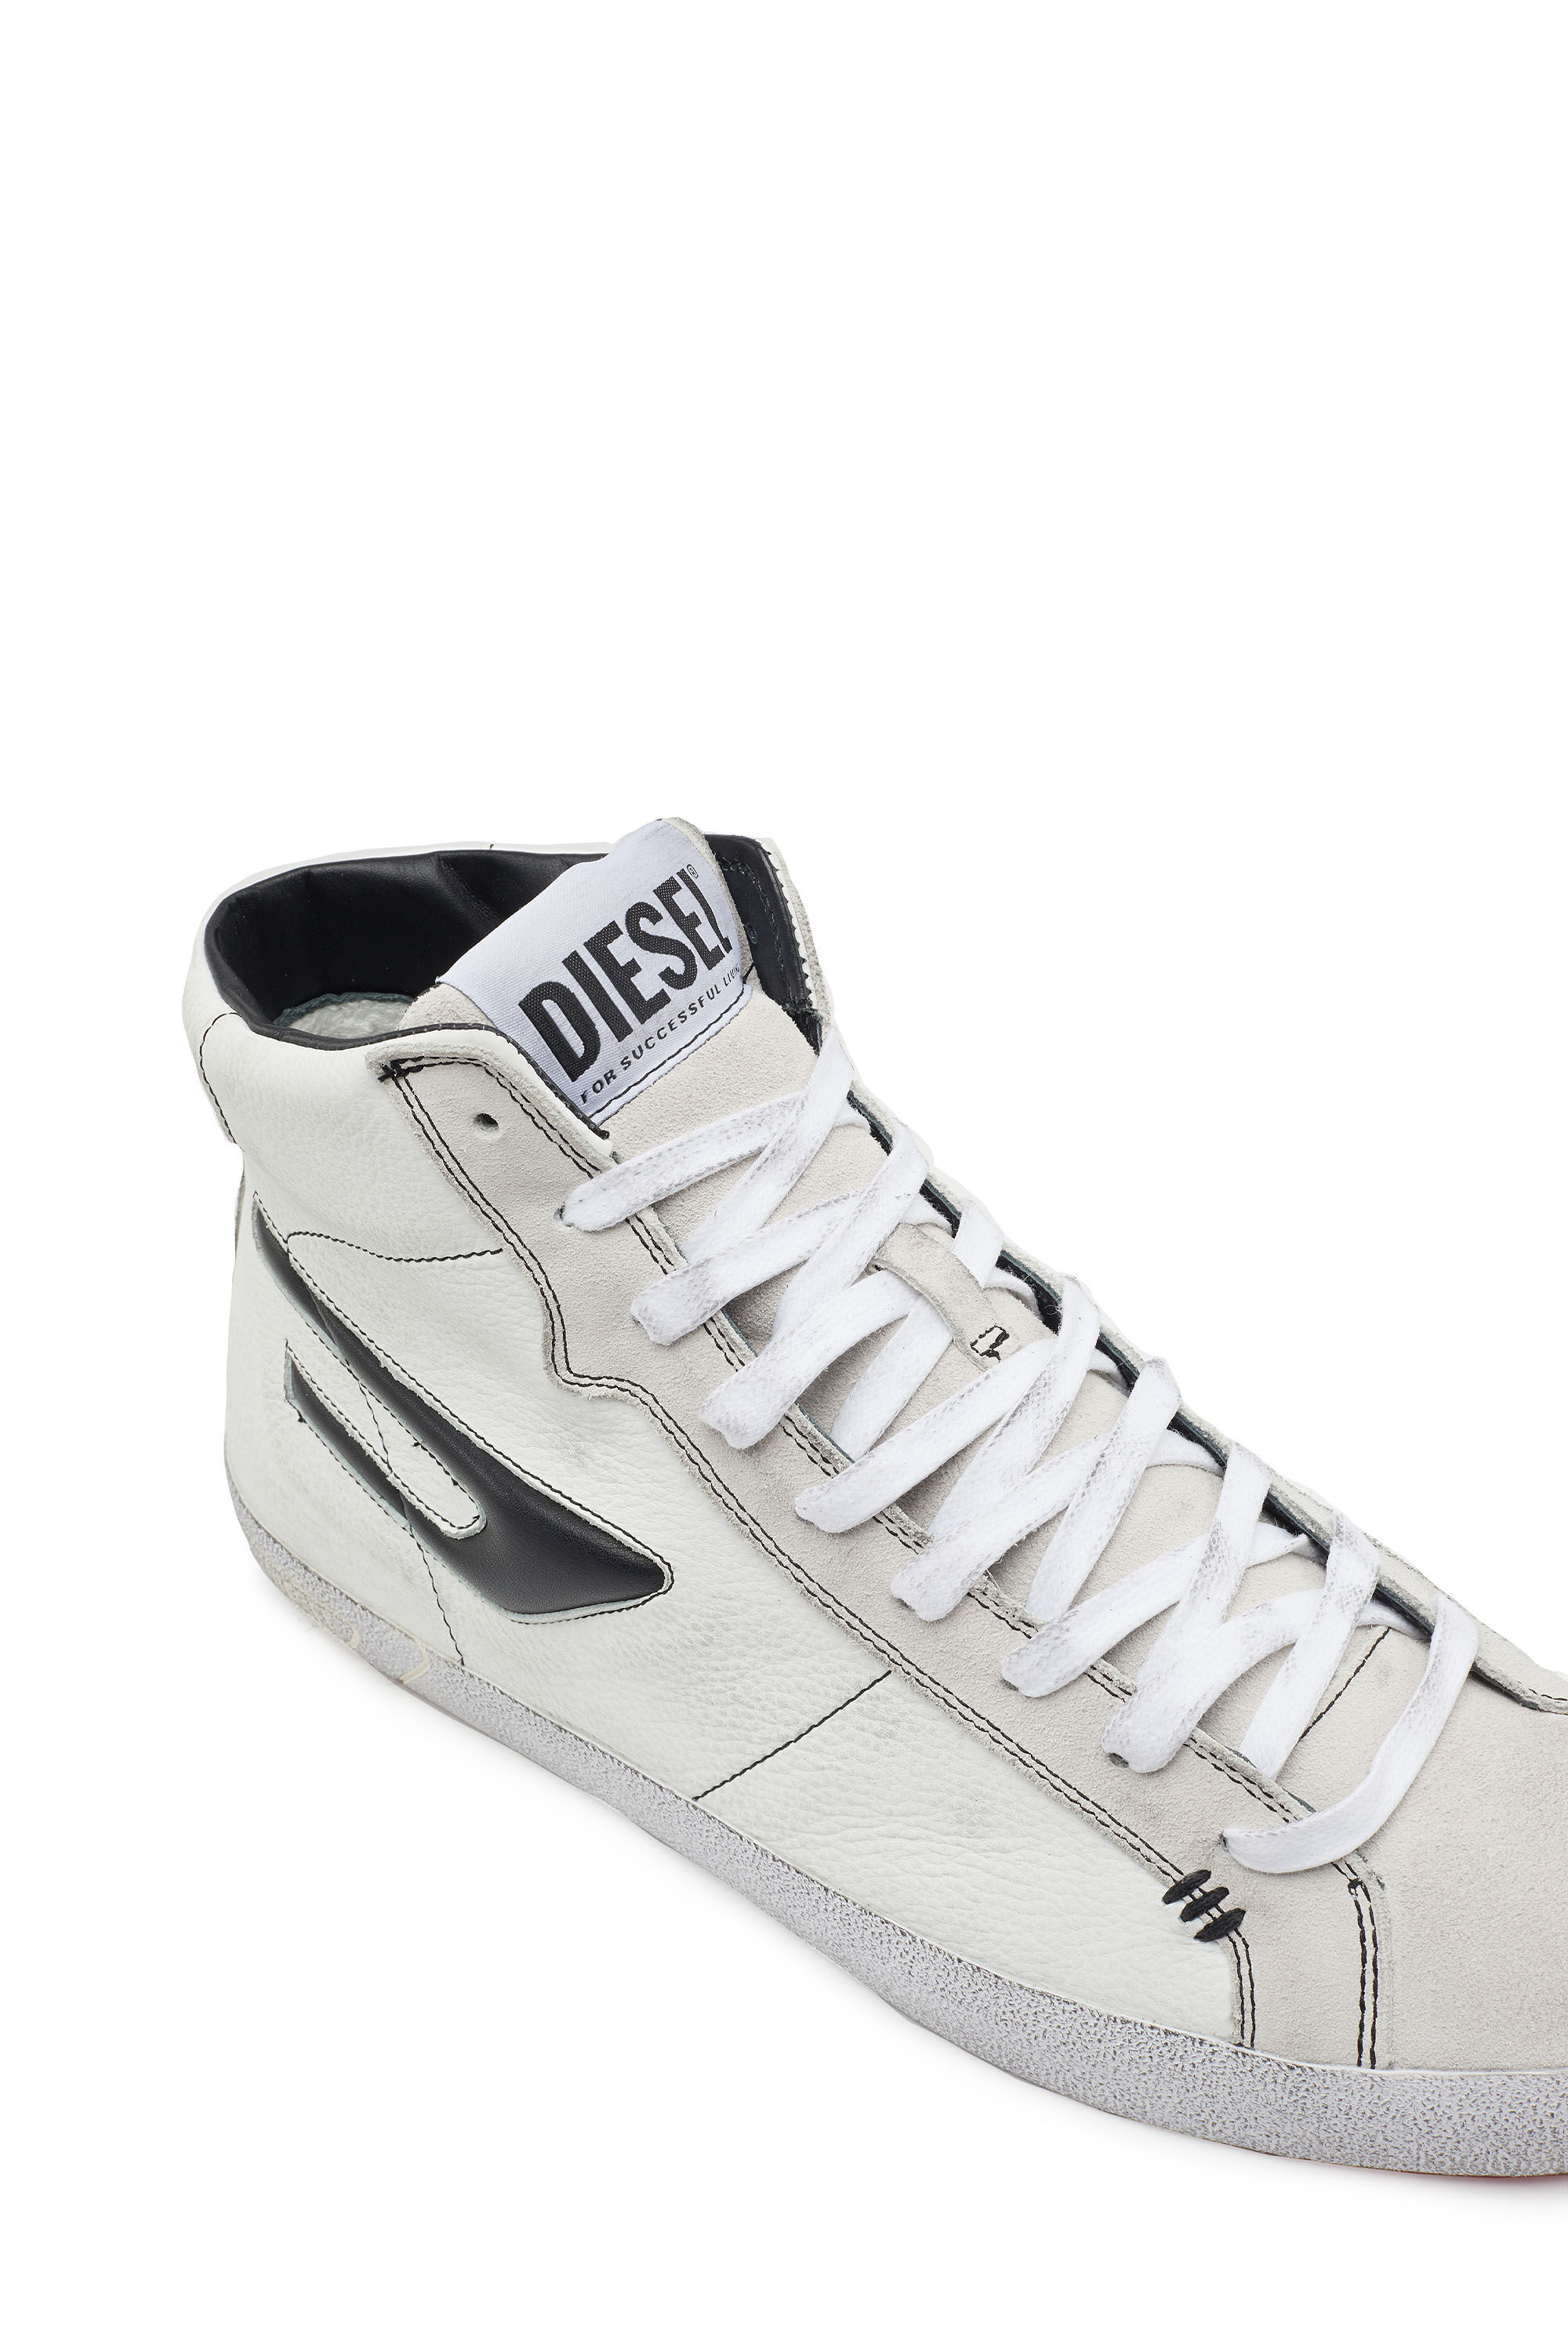 Men's S-Leroji Mid - High-top leather sneakers with D logo | Diesel